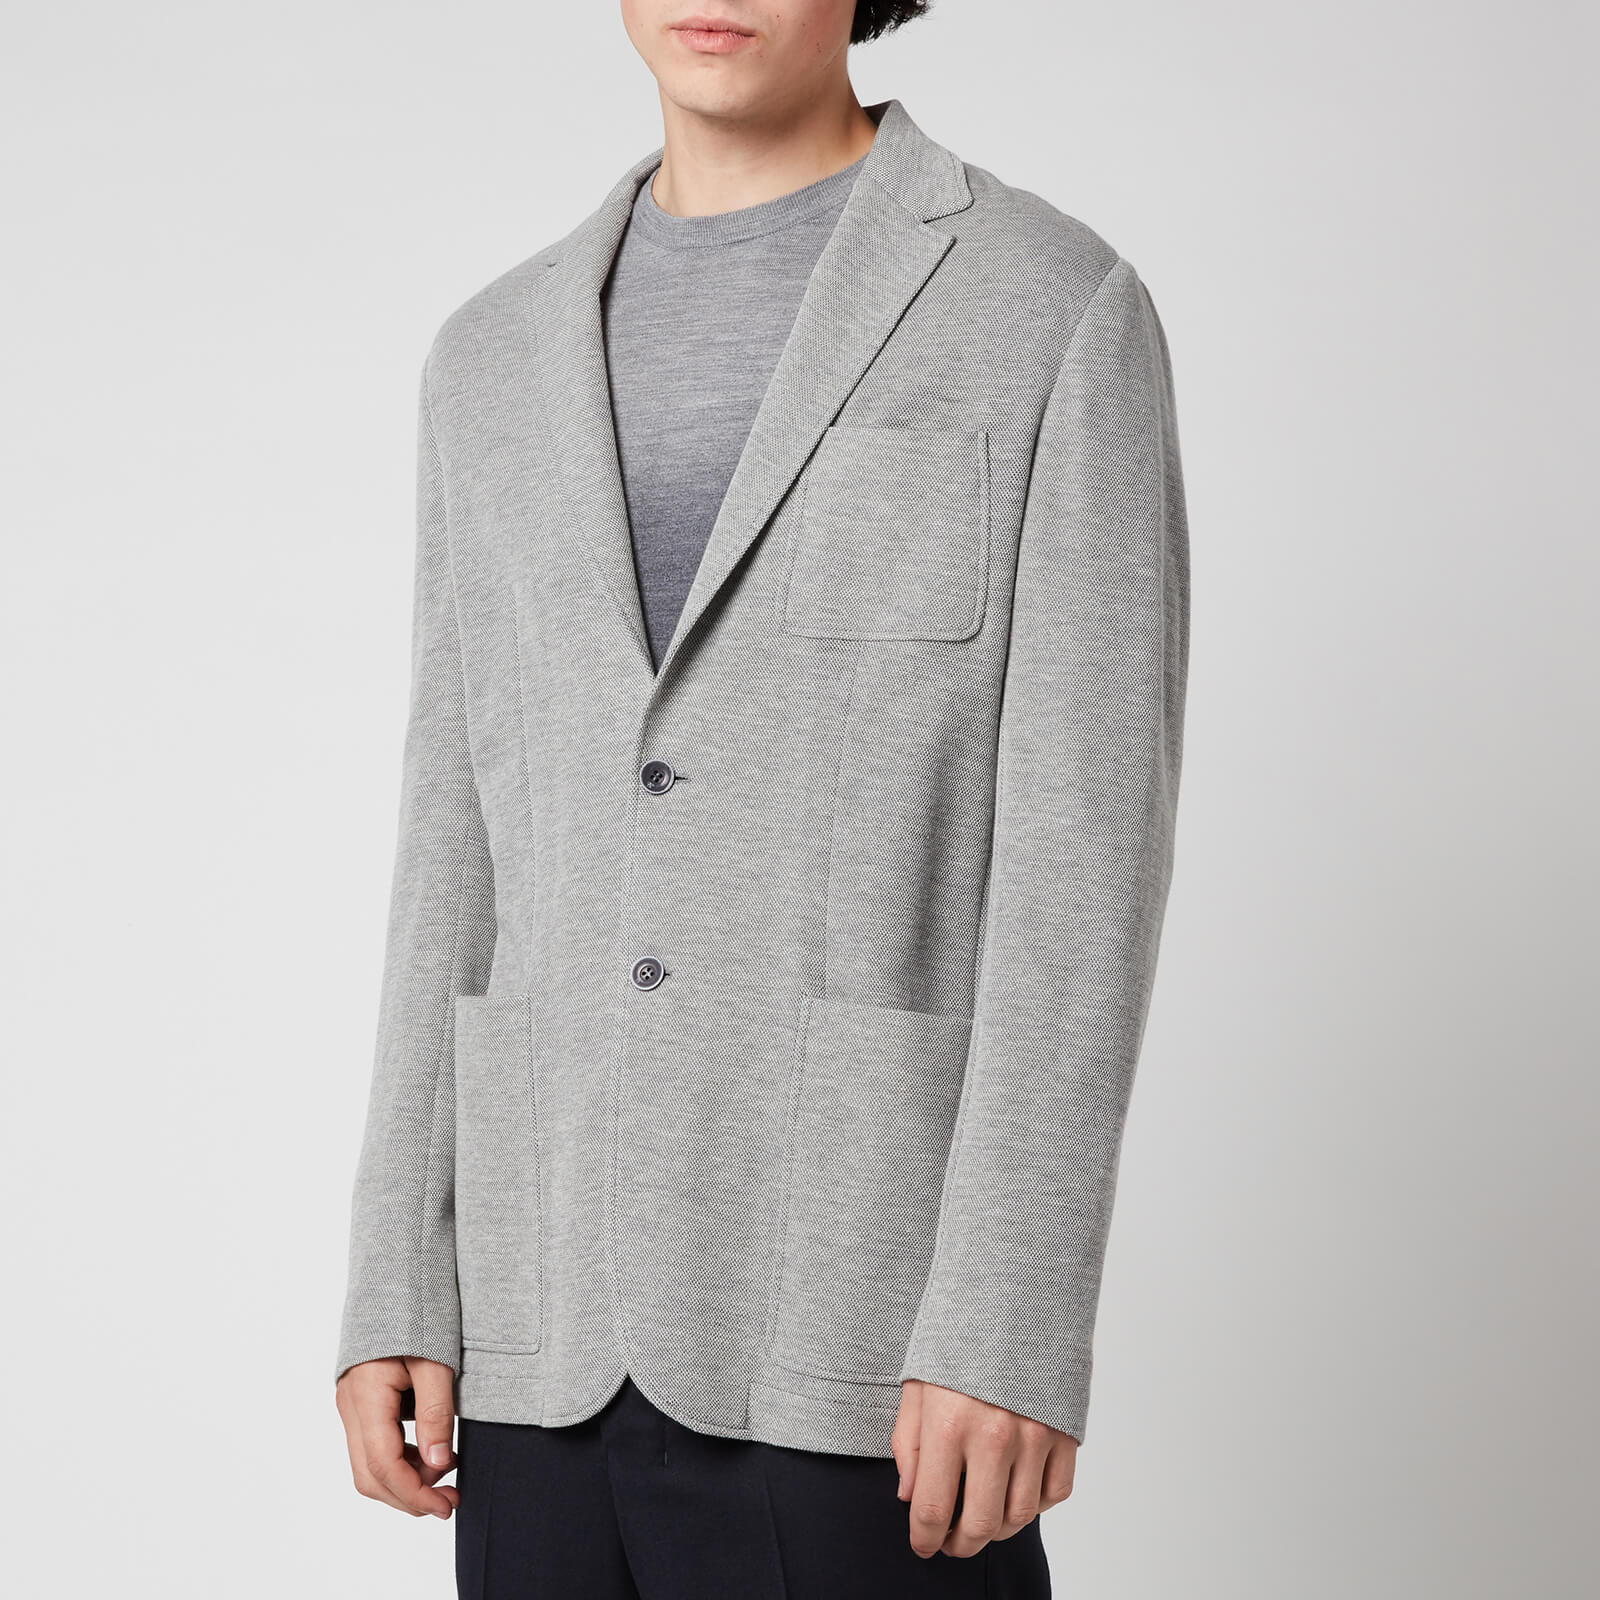 Canali Men's Slim Fit Jersey Cardigan Blazer - Grey - IT 50/L